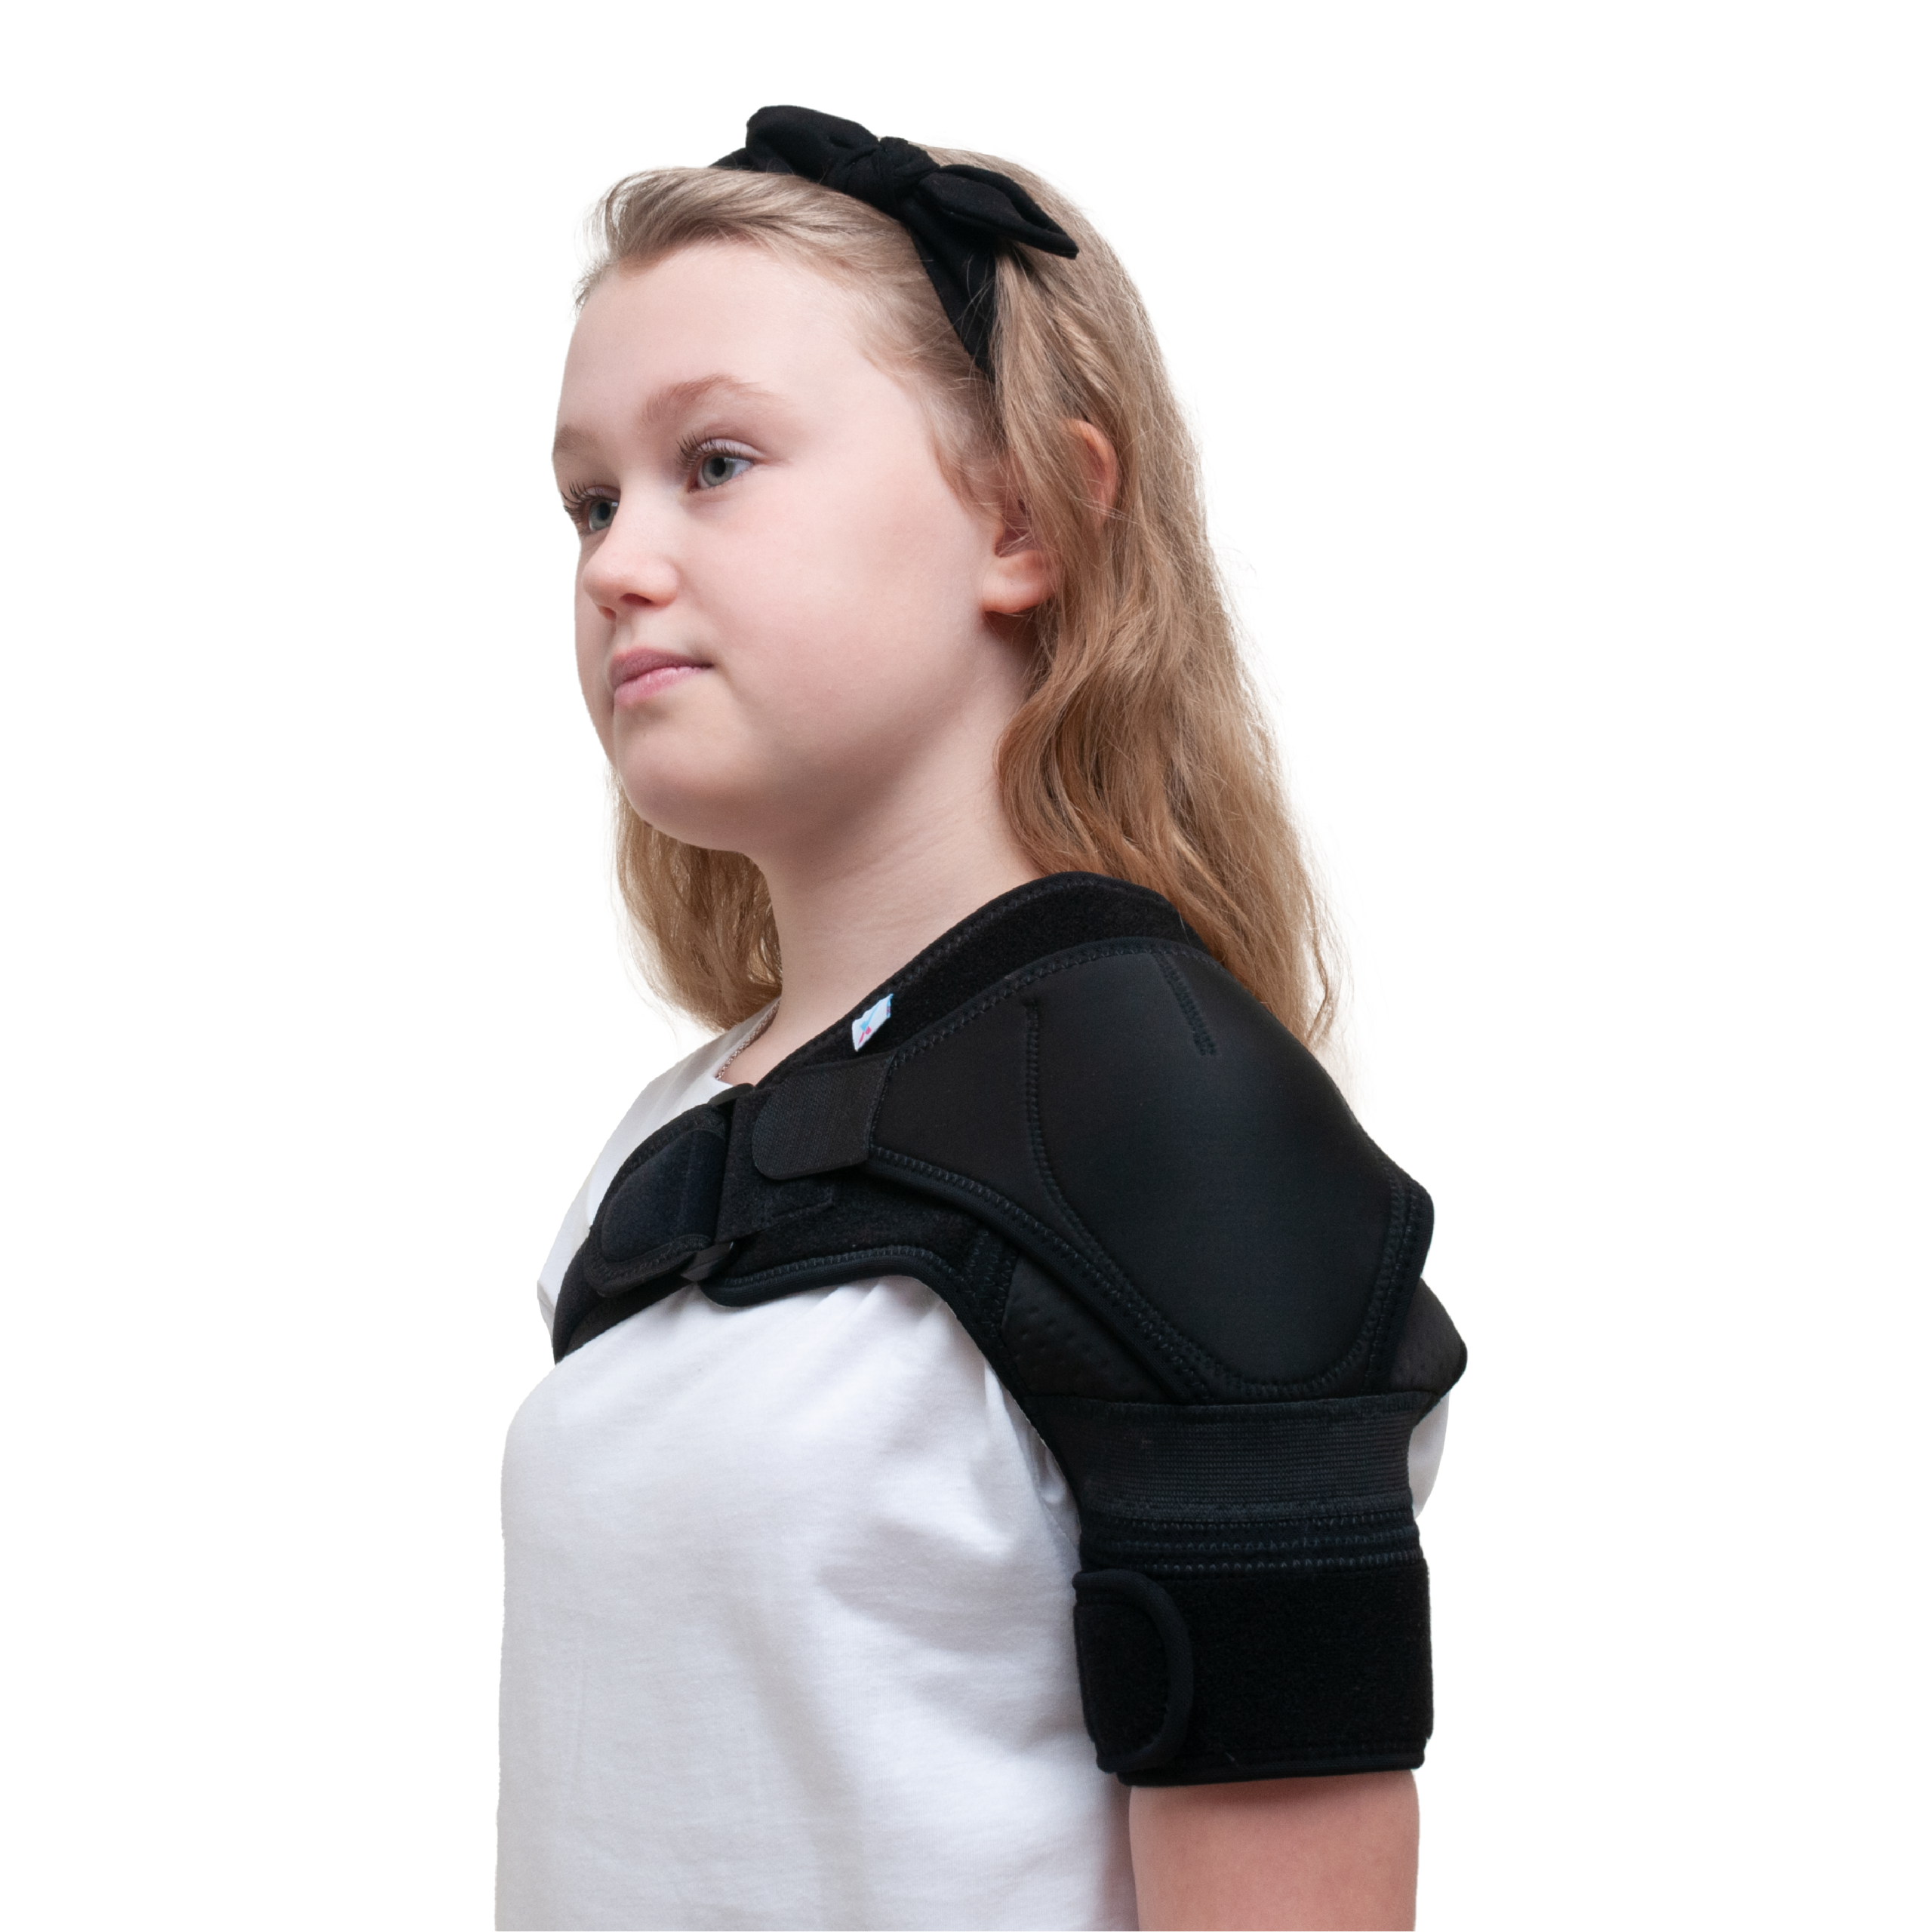 Children's Shoulder Stabiliser Support, One Size Fits Most, Orthotix